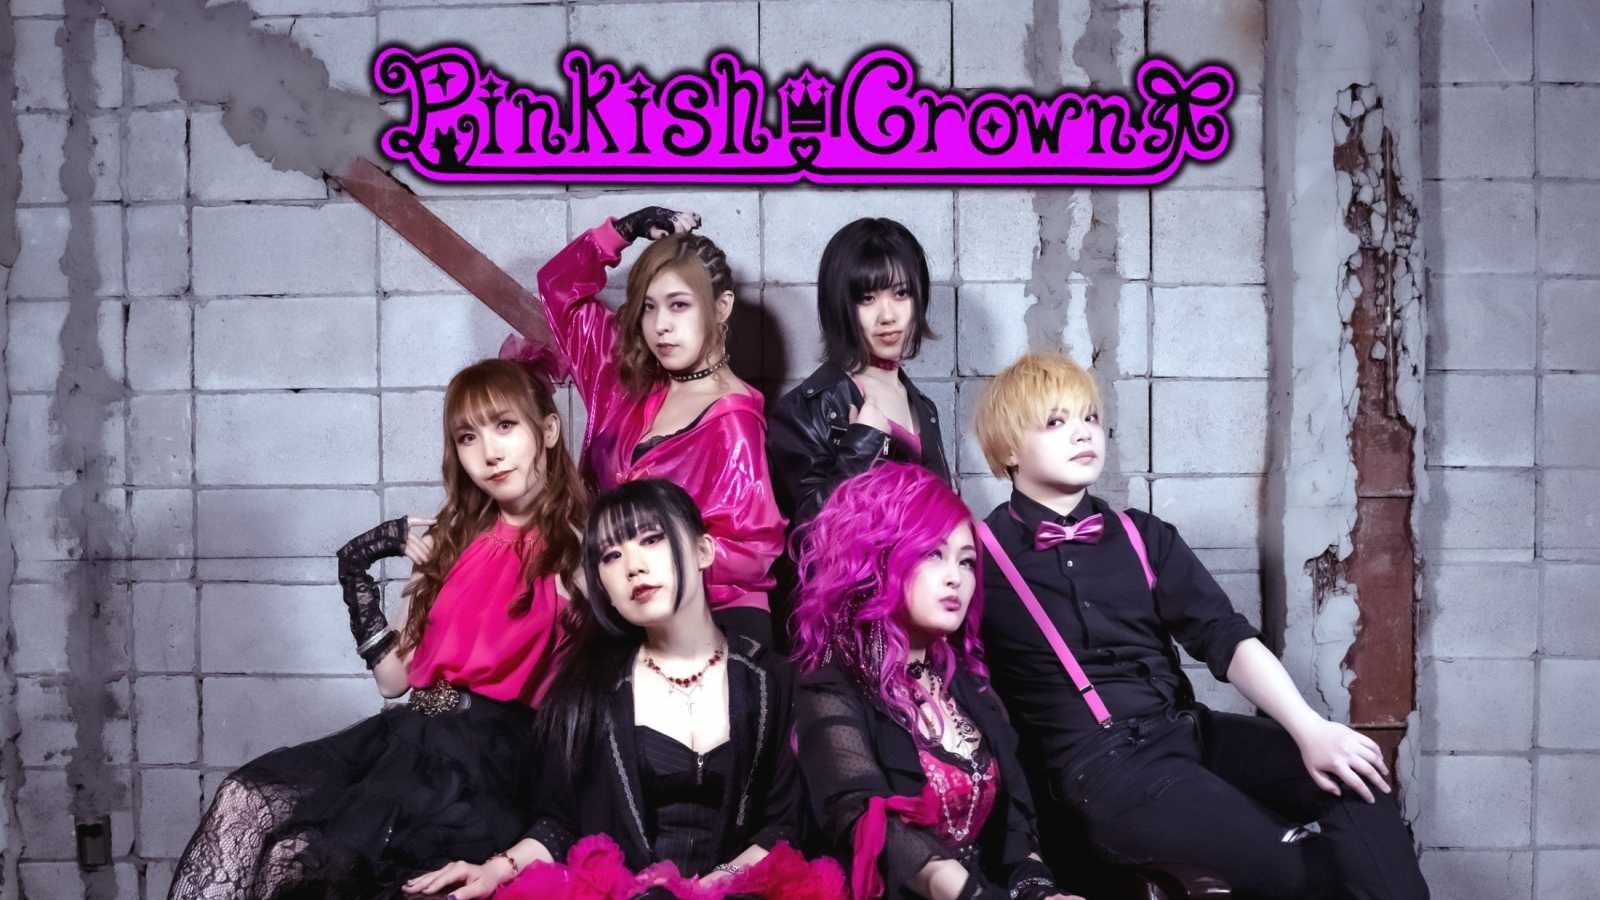 Novo álbum da Pinkish Crown © Pinkish Crown. All Rights Reserved.